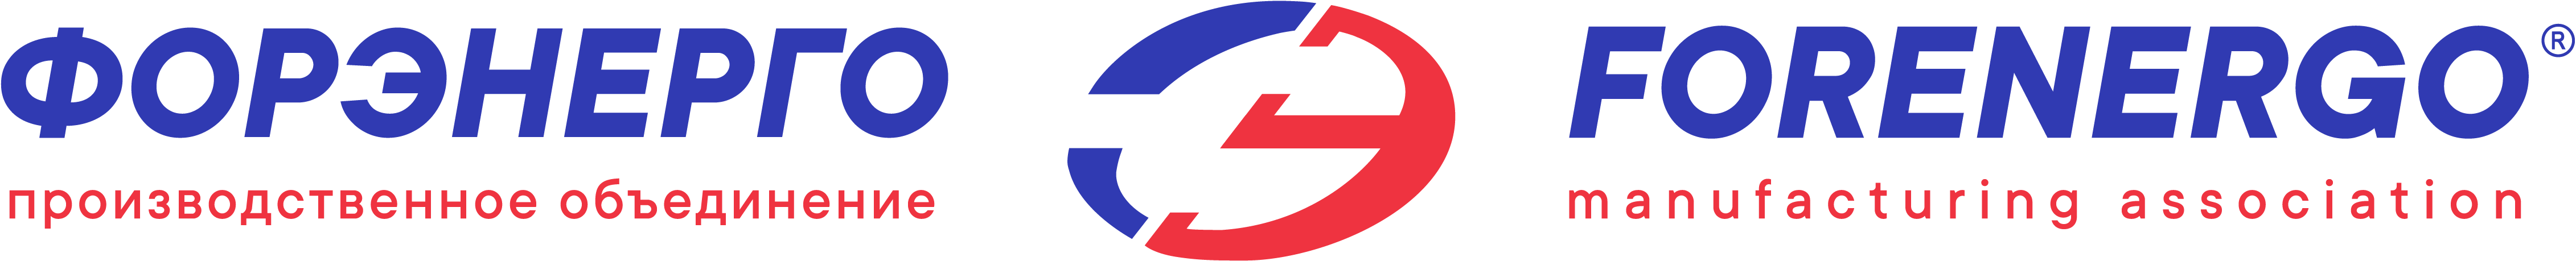 forenergo logo RGB 01